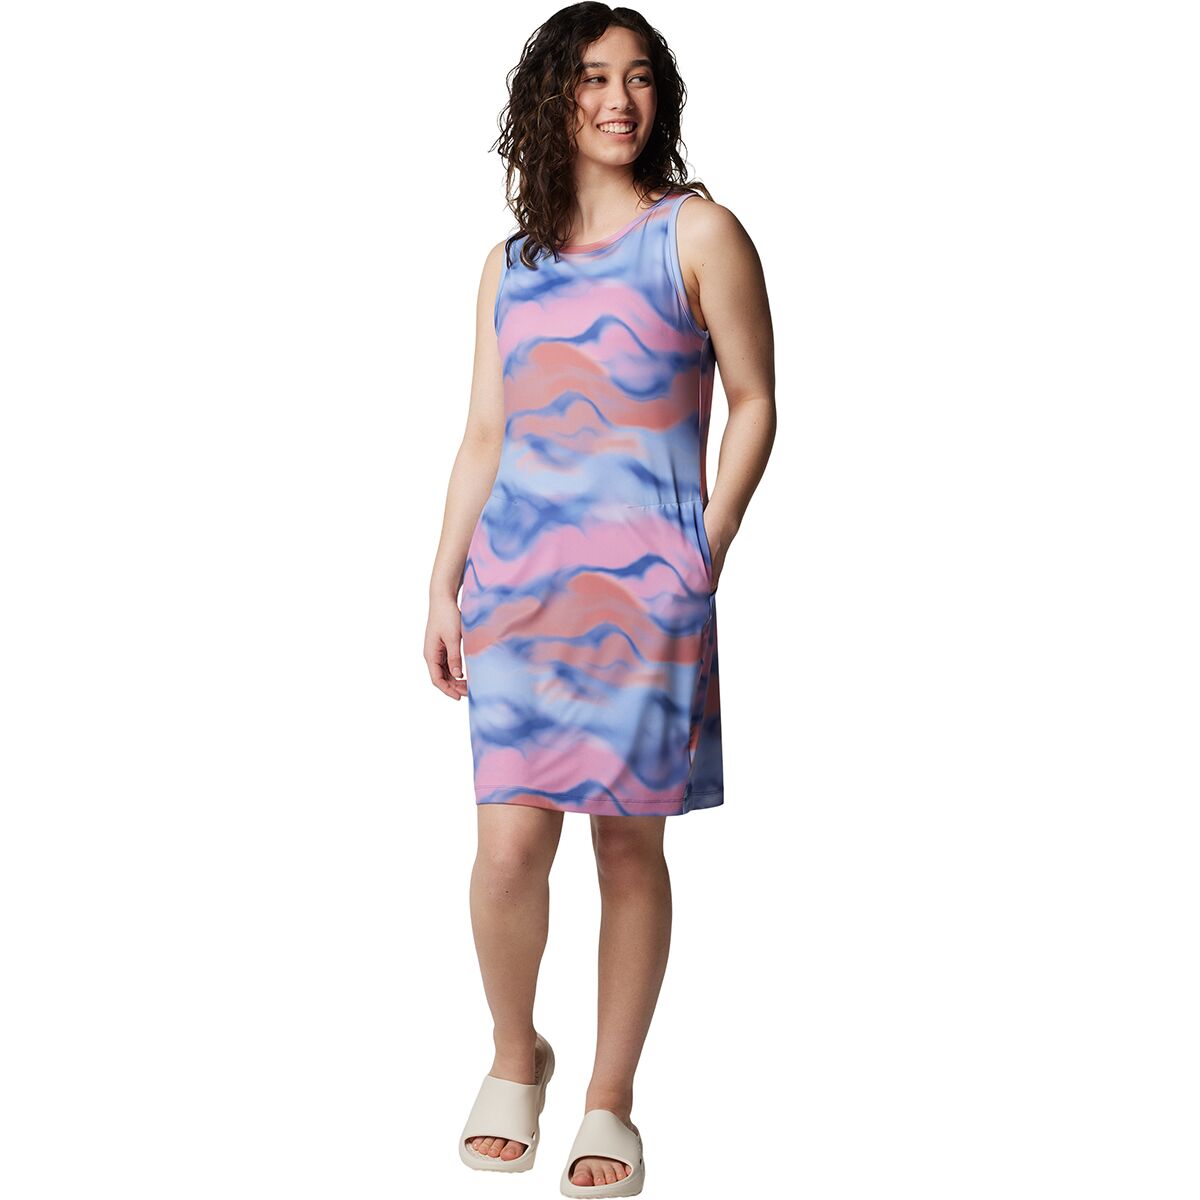 Chill River Printed Dress - Women